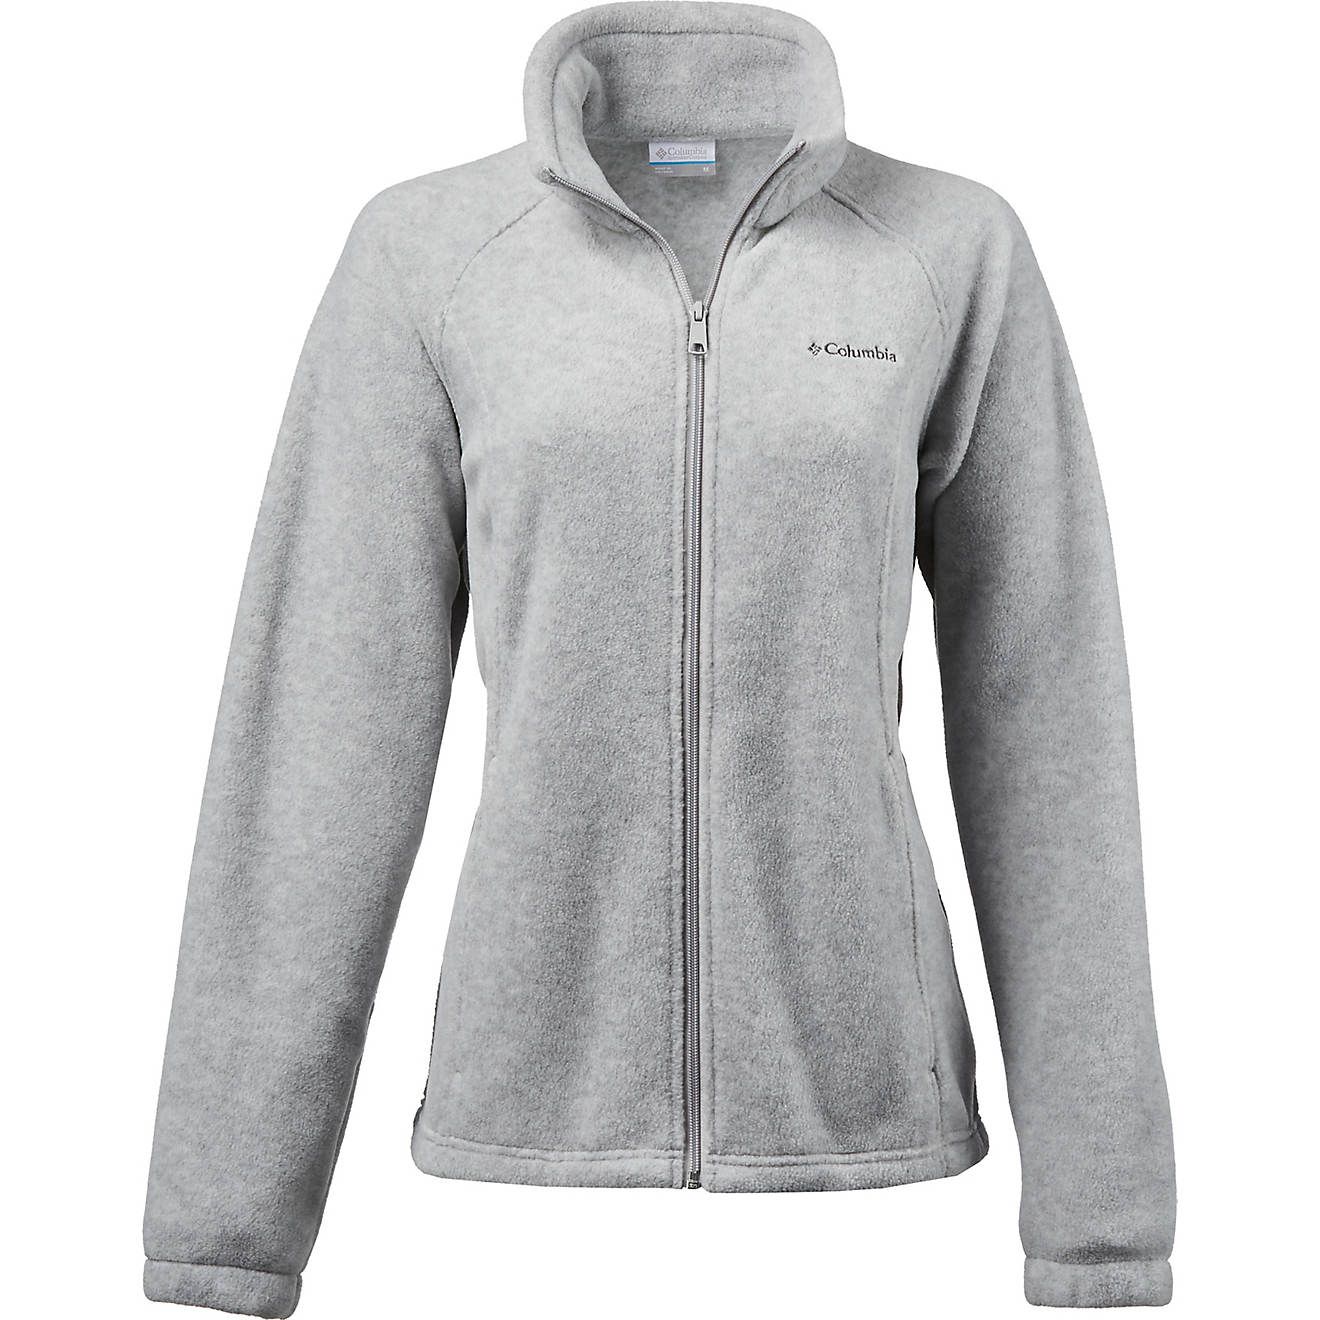 Columbia Sportswear Women's Benton Springs Full Zip Fleece Jacket | Academy Sports + Outdoor Affiliate